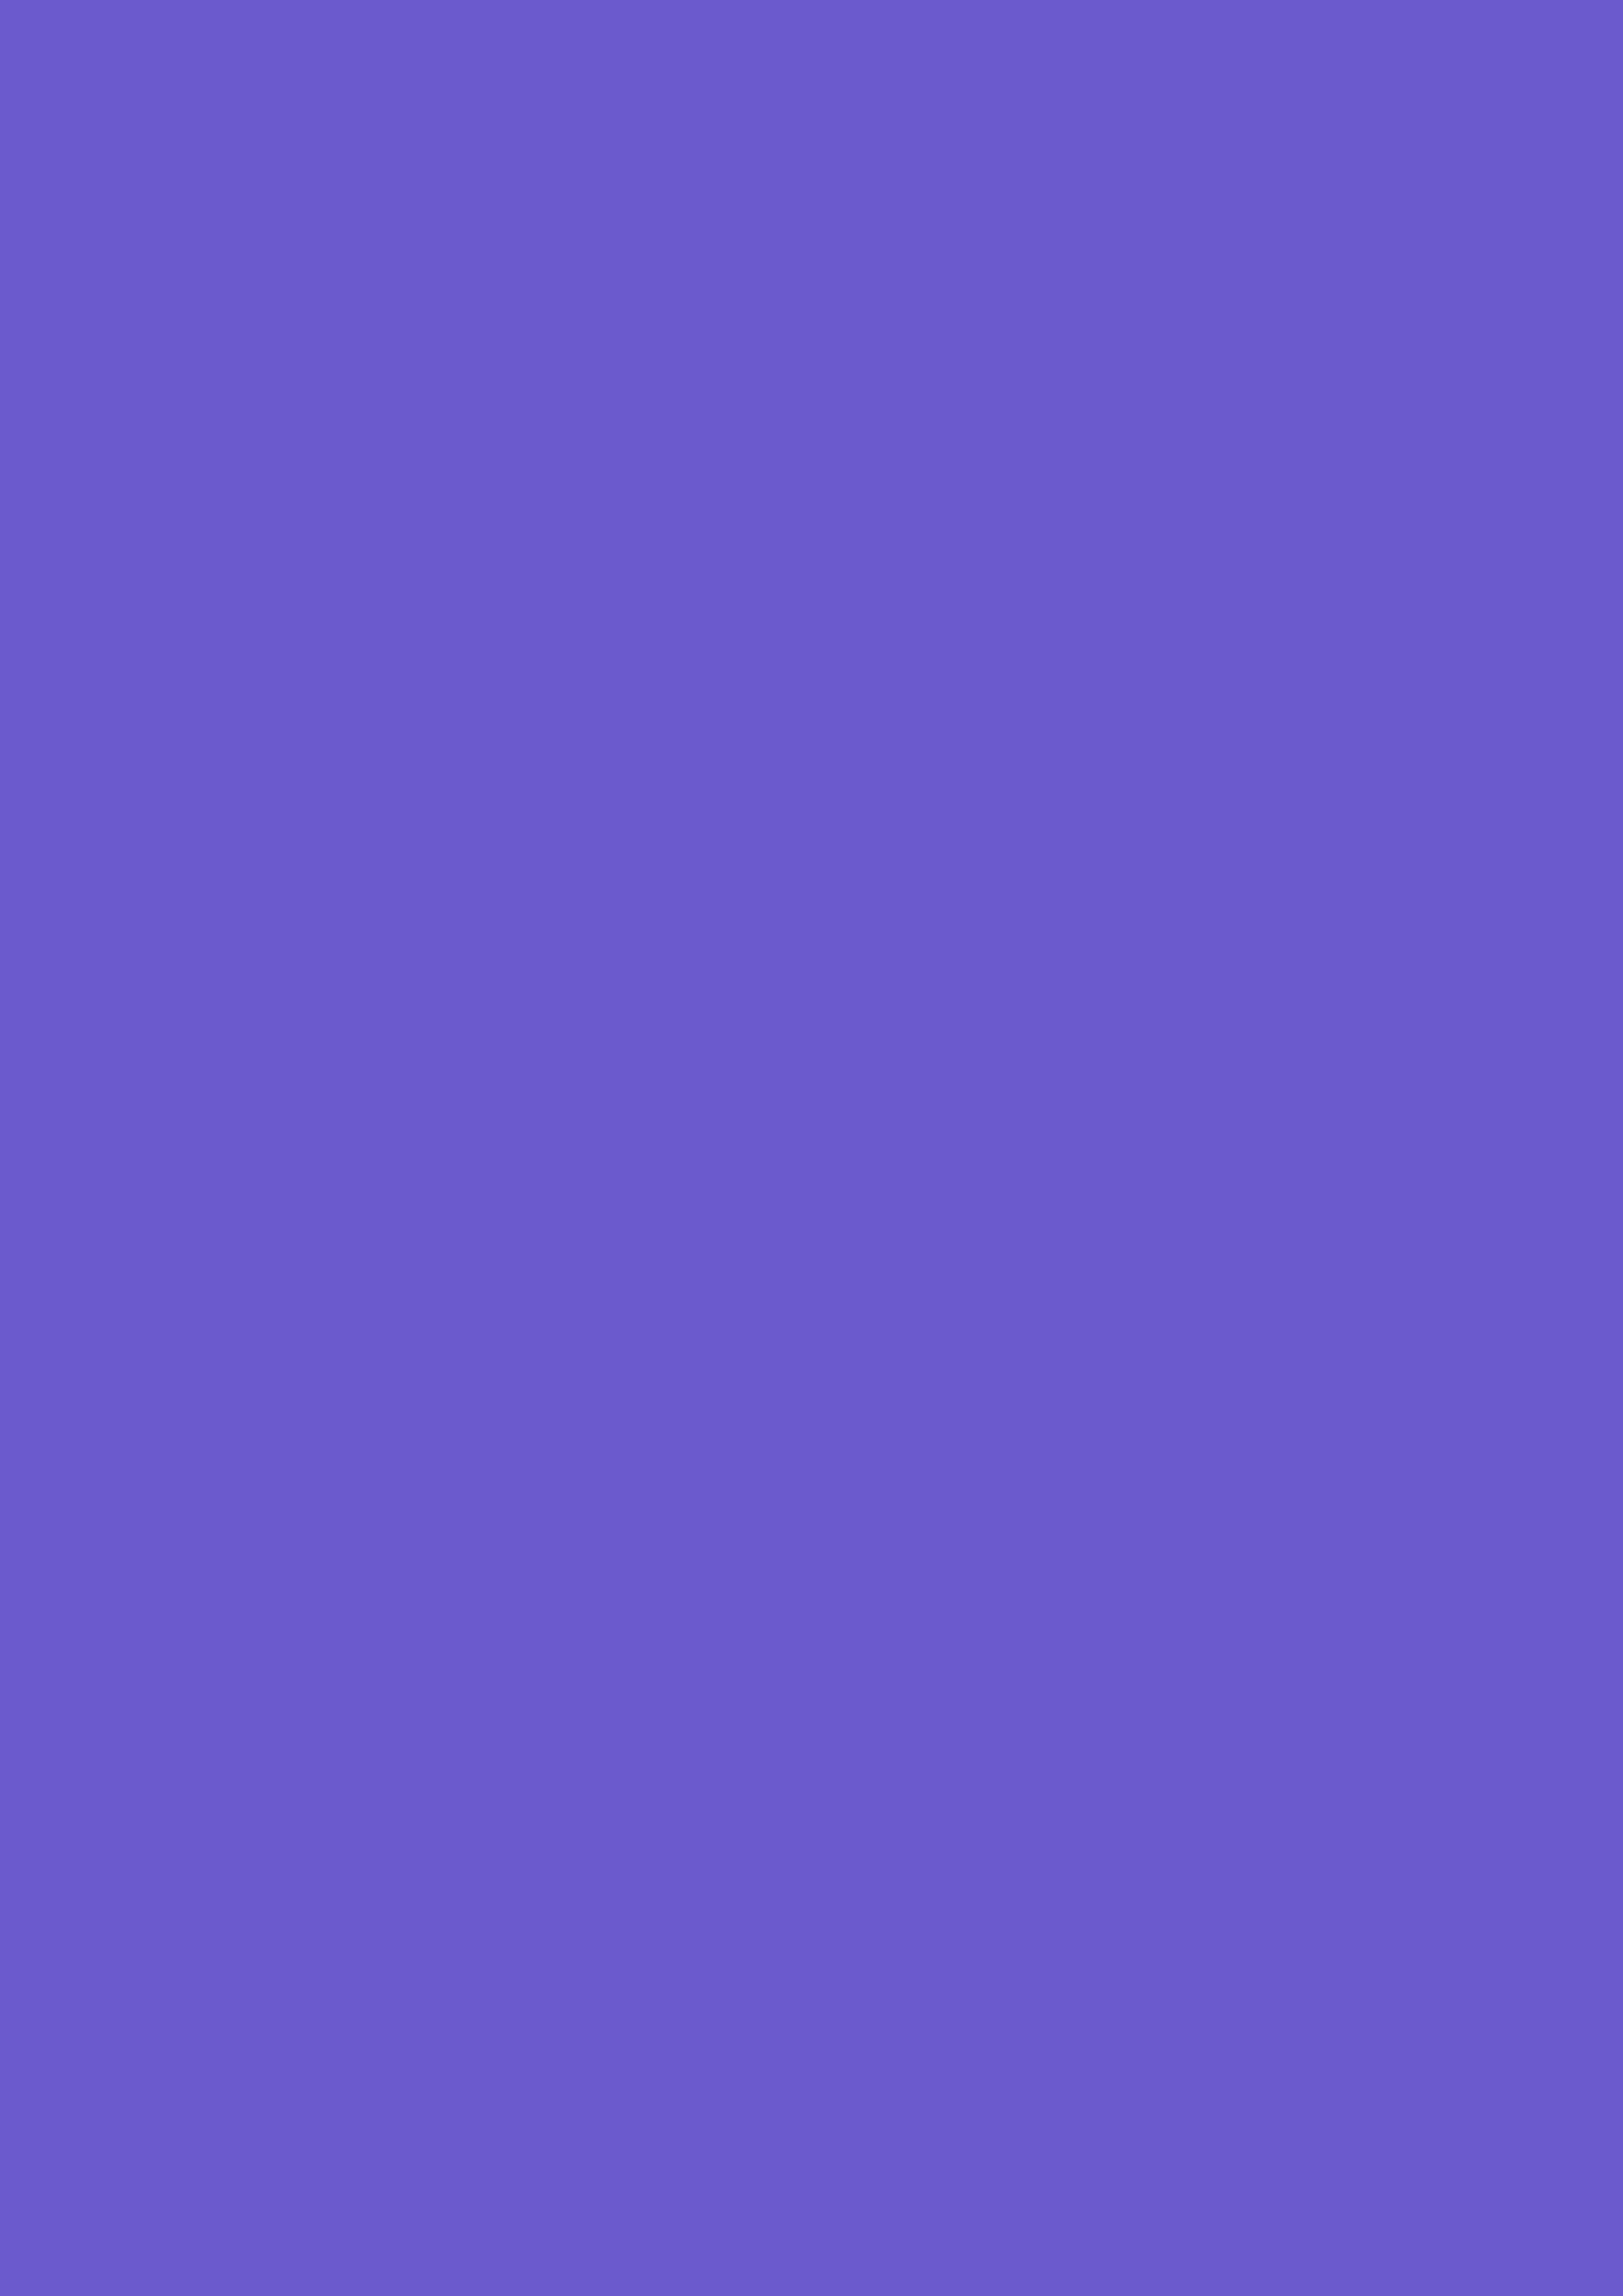 2480x3508 Slate Blue Solid Color Background